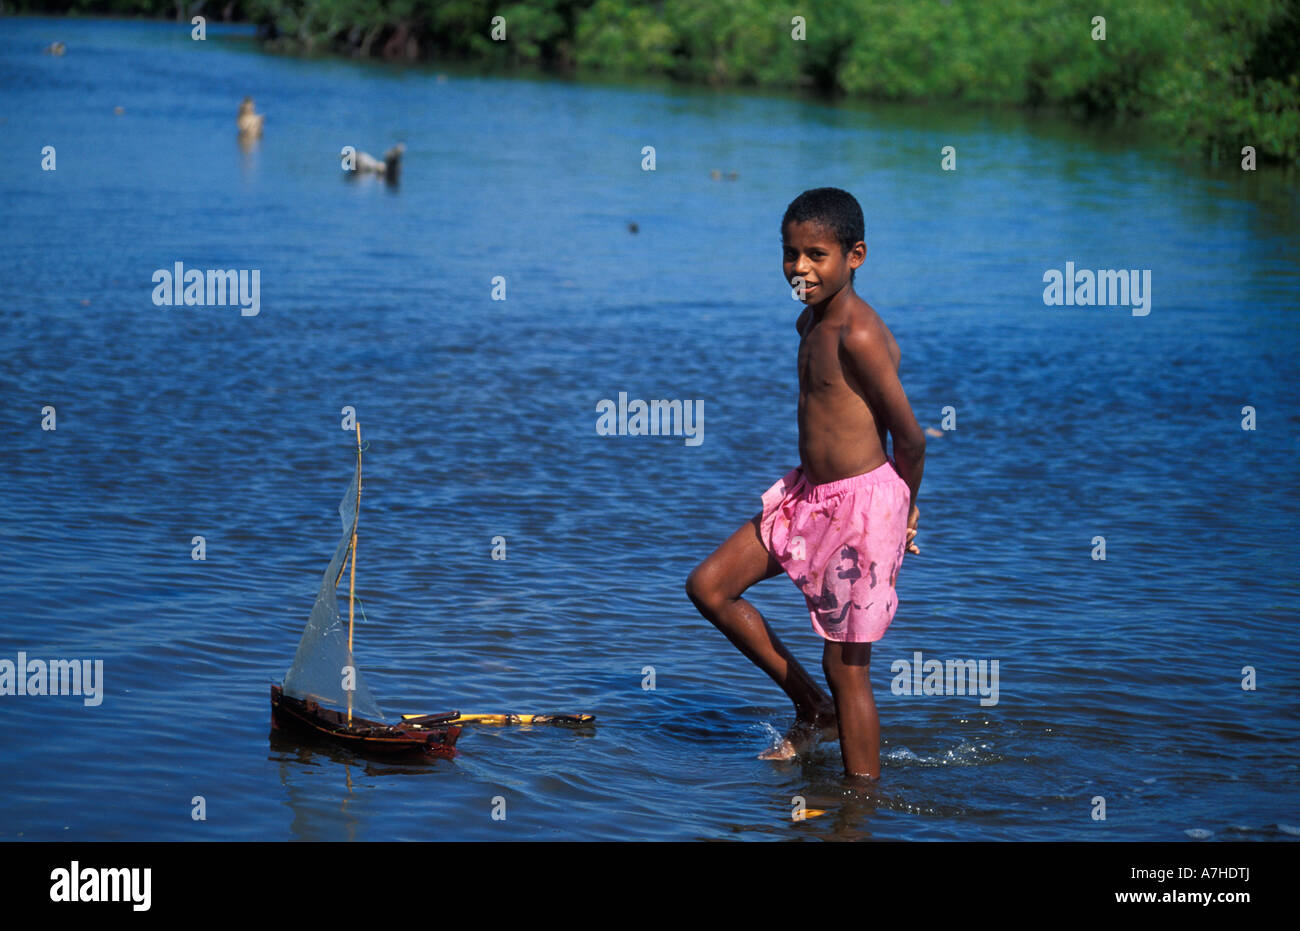 Suaheli junge spielt mit seinem kleinen Dhau am Stadtrand Siyu, Pate Insel Lamu-Archipel, Kenia Stockfoto